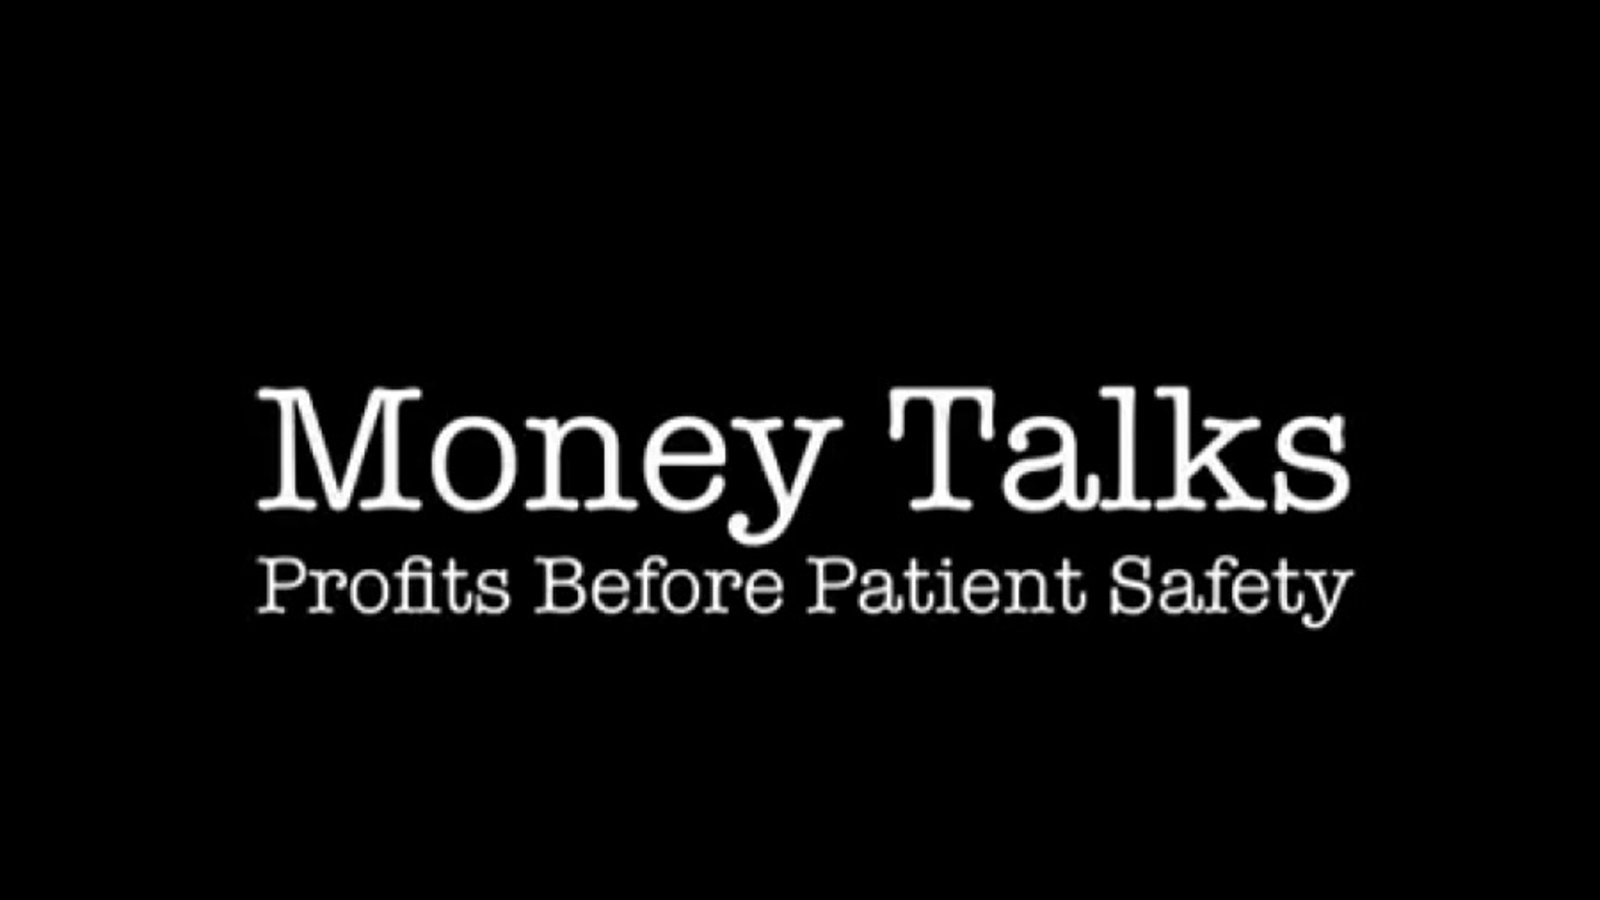 Money Talks: Profits Over Patient Safety - Exposing Dishonest Drug Industry Practices